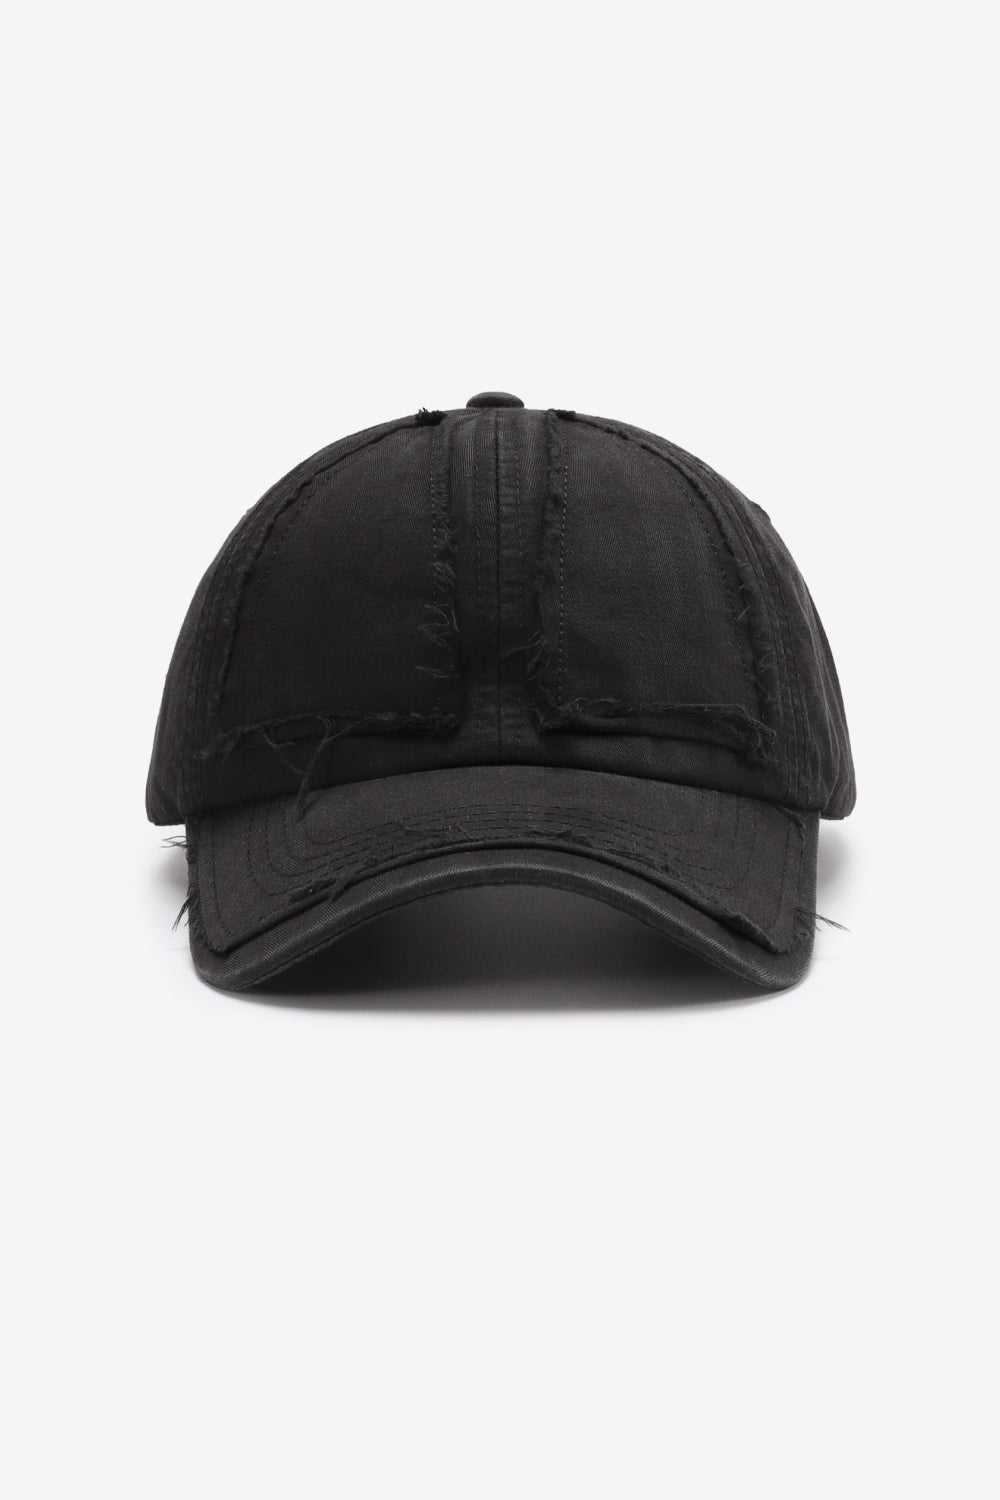 Distressed Adjustable Baseball Cap Black One Size